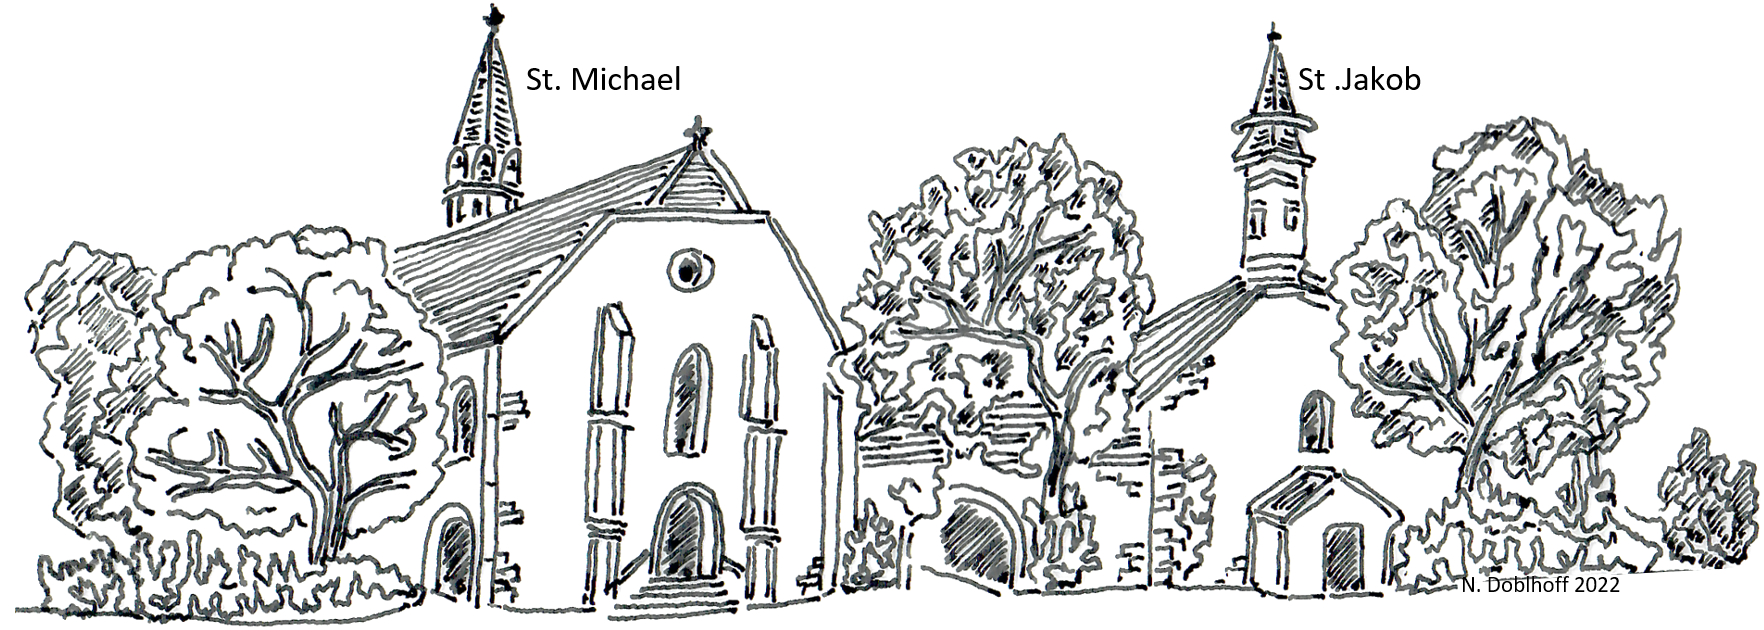 St. Michael und St. Jakob